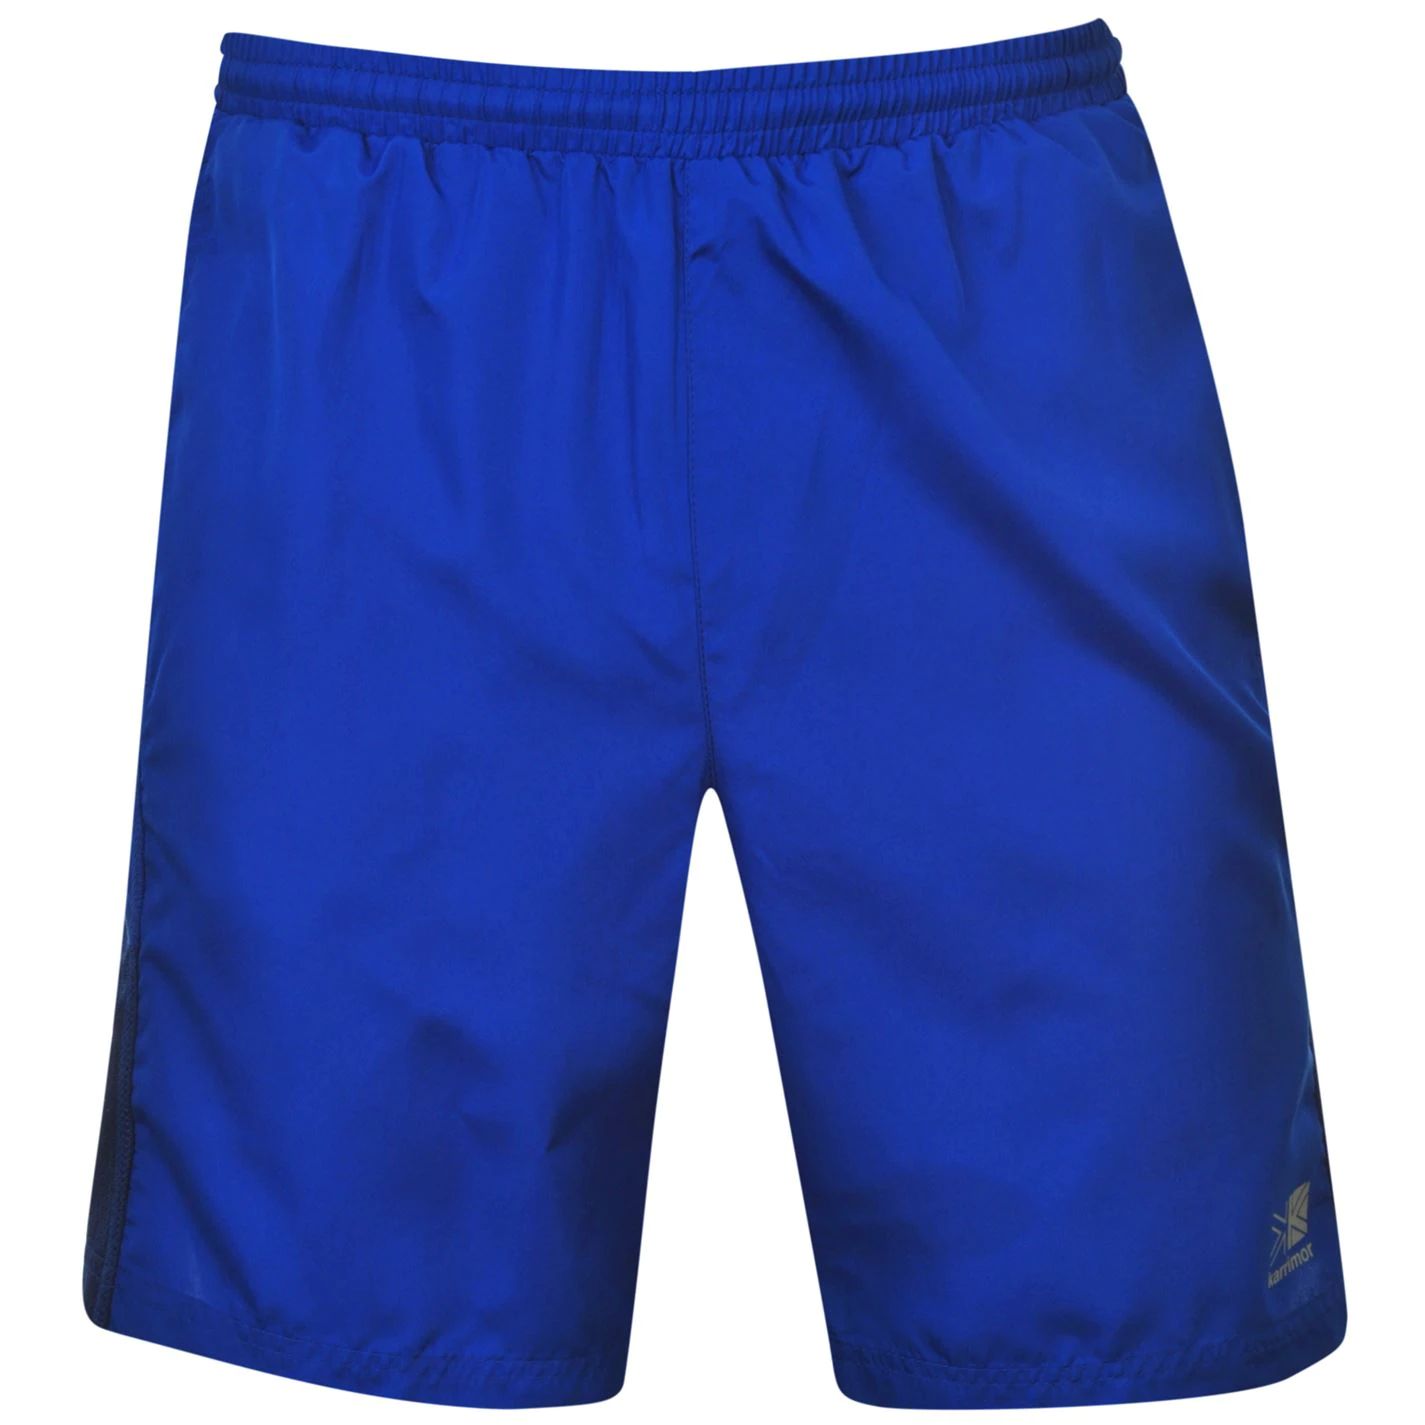 pánské šortky KARRIMOR - CLASSIC BLUE - 2XL